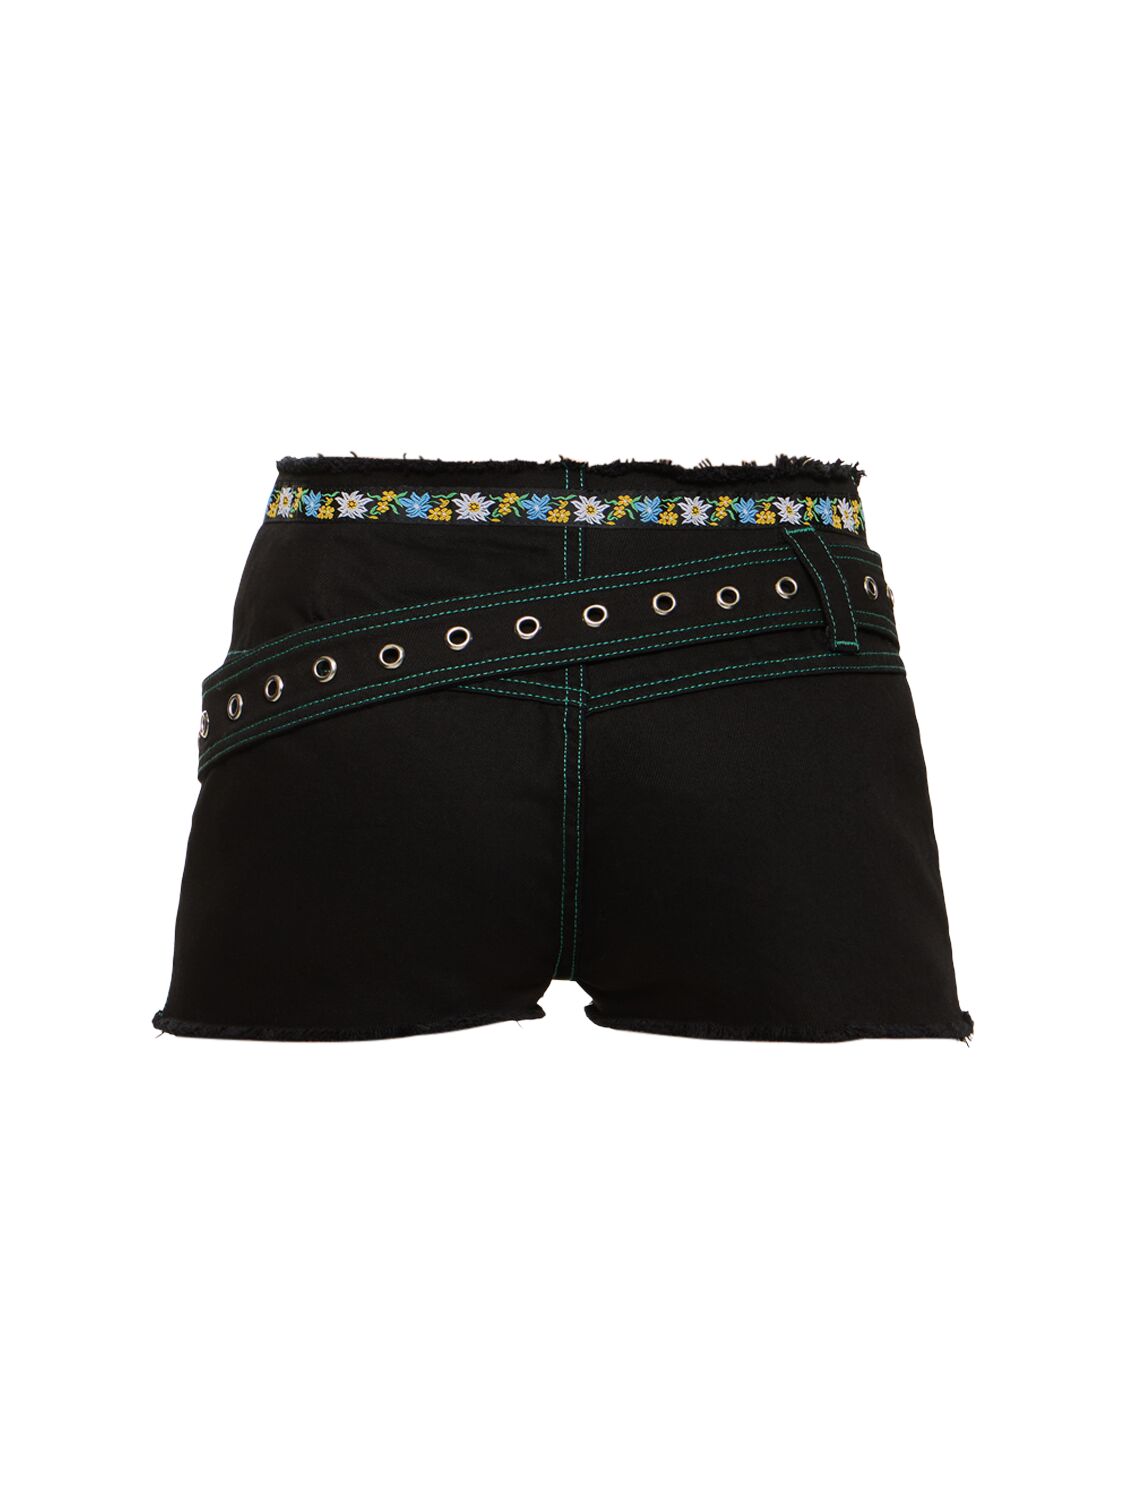 Shop Cormio Robin Fitted Denim Shorts W/belt In 블랙